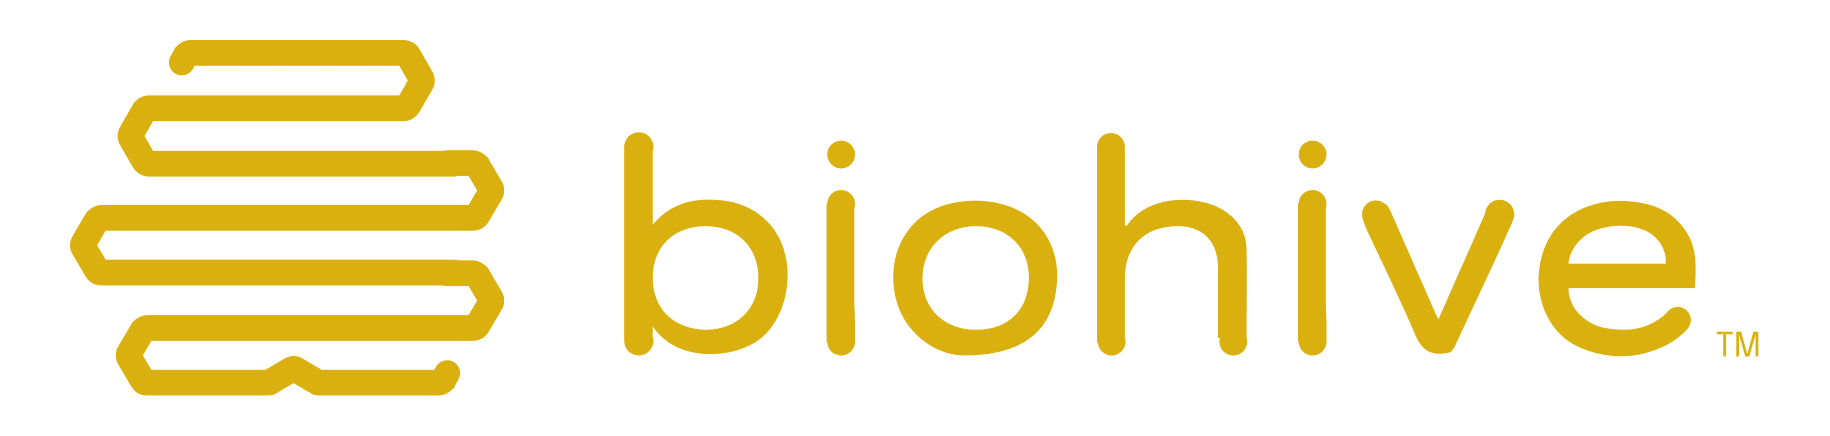 BioHive Announces Bi